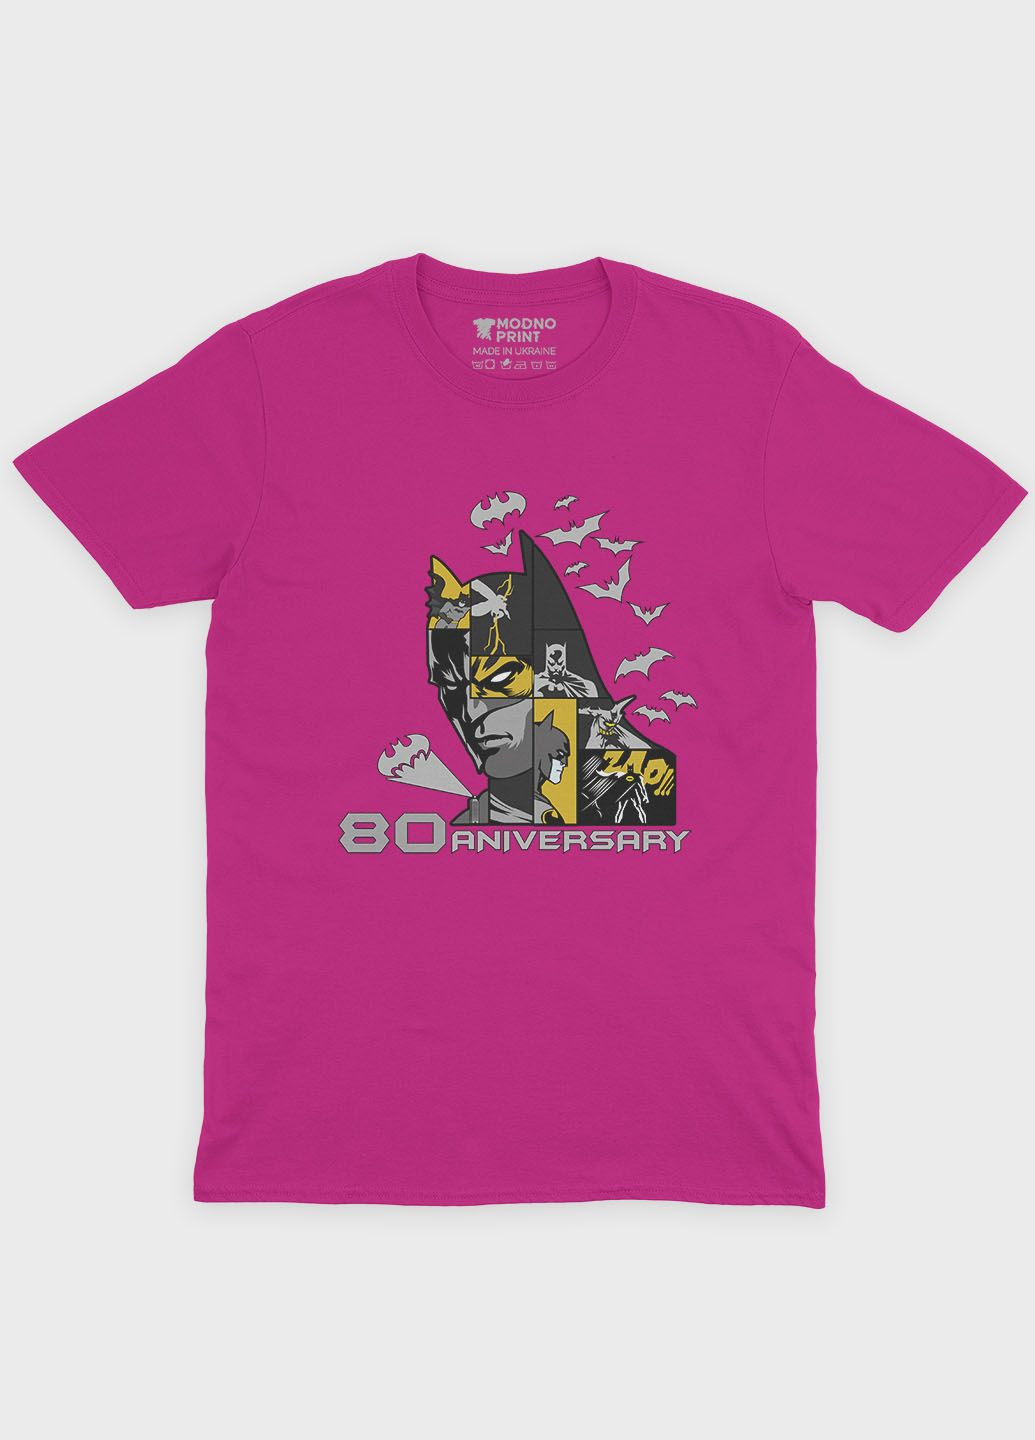 Розовая демисезонная футболка для мальчика с принтом супергероя - бэтмен (ts001-1-fuxj-006-003-035-b) Modno